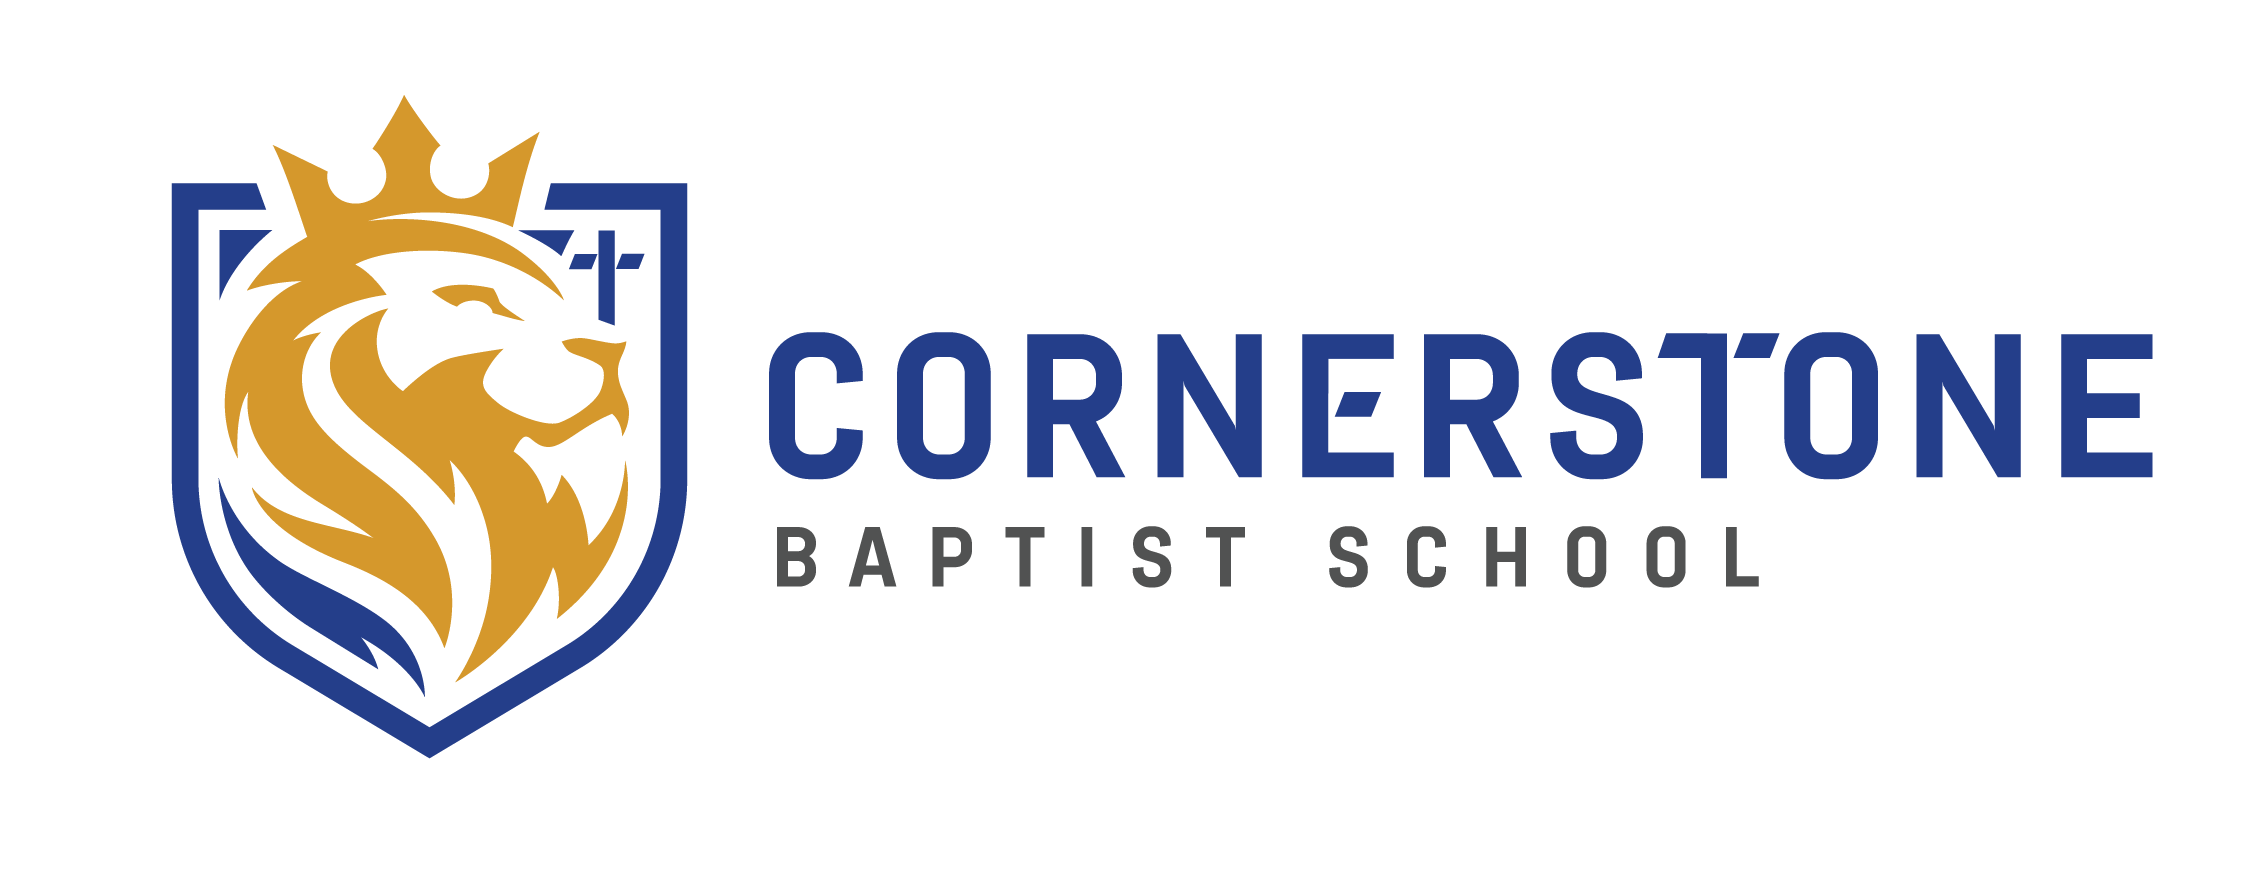 Cornerstone Baptist School